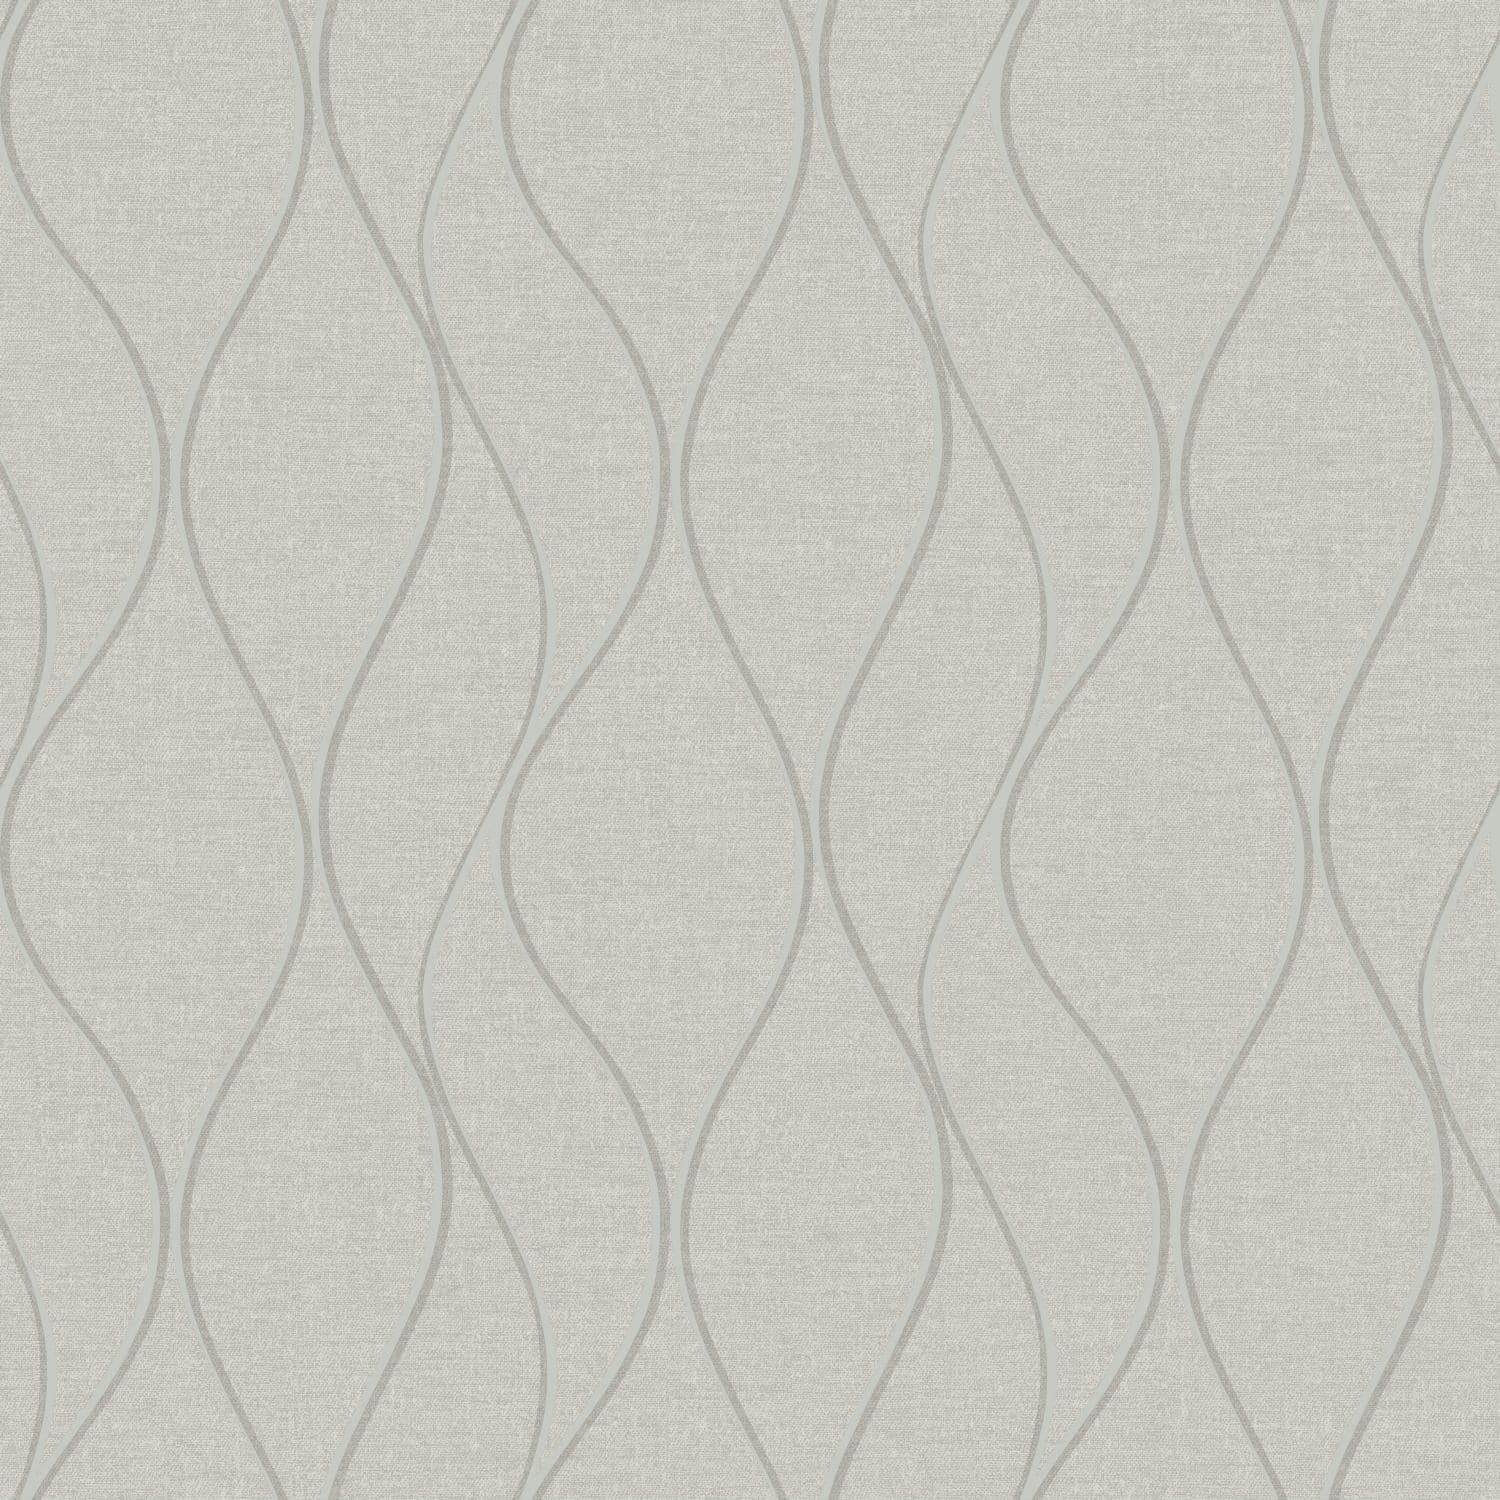 RoomMates Wave Ogee Peel &#x26; Stick Wallpaper